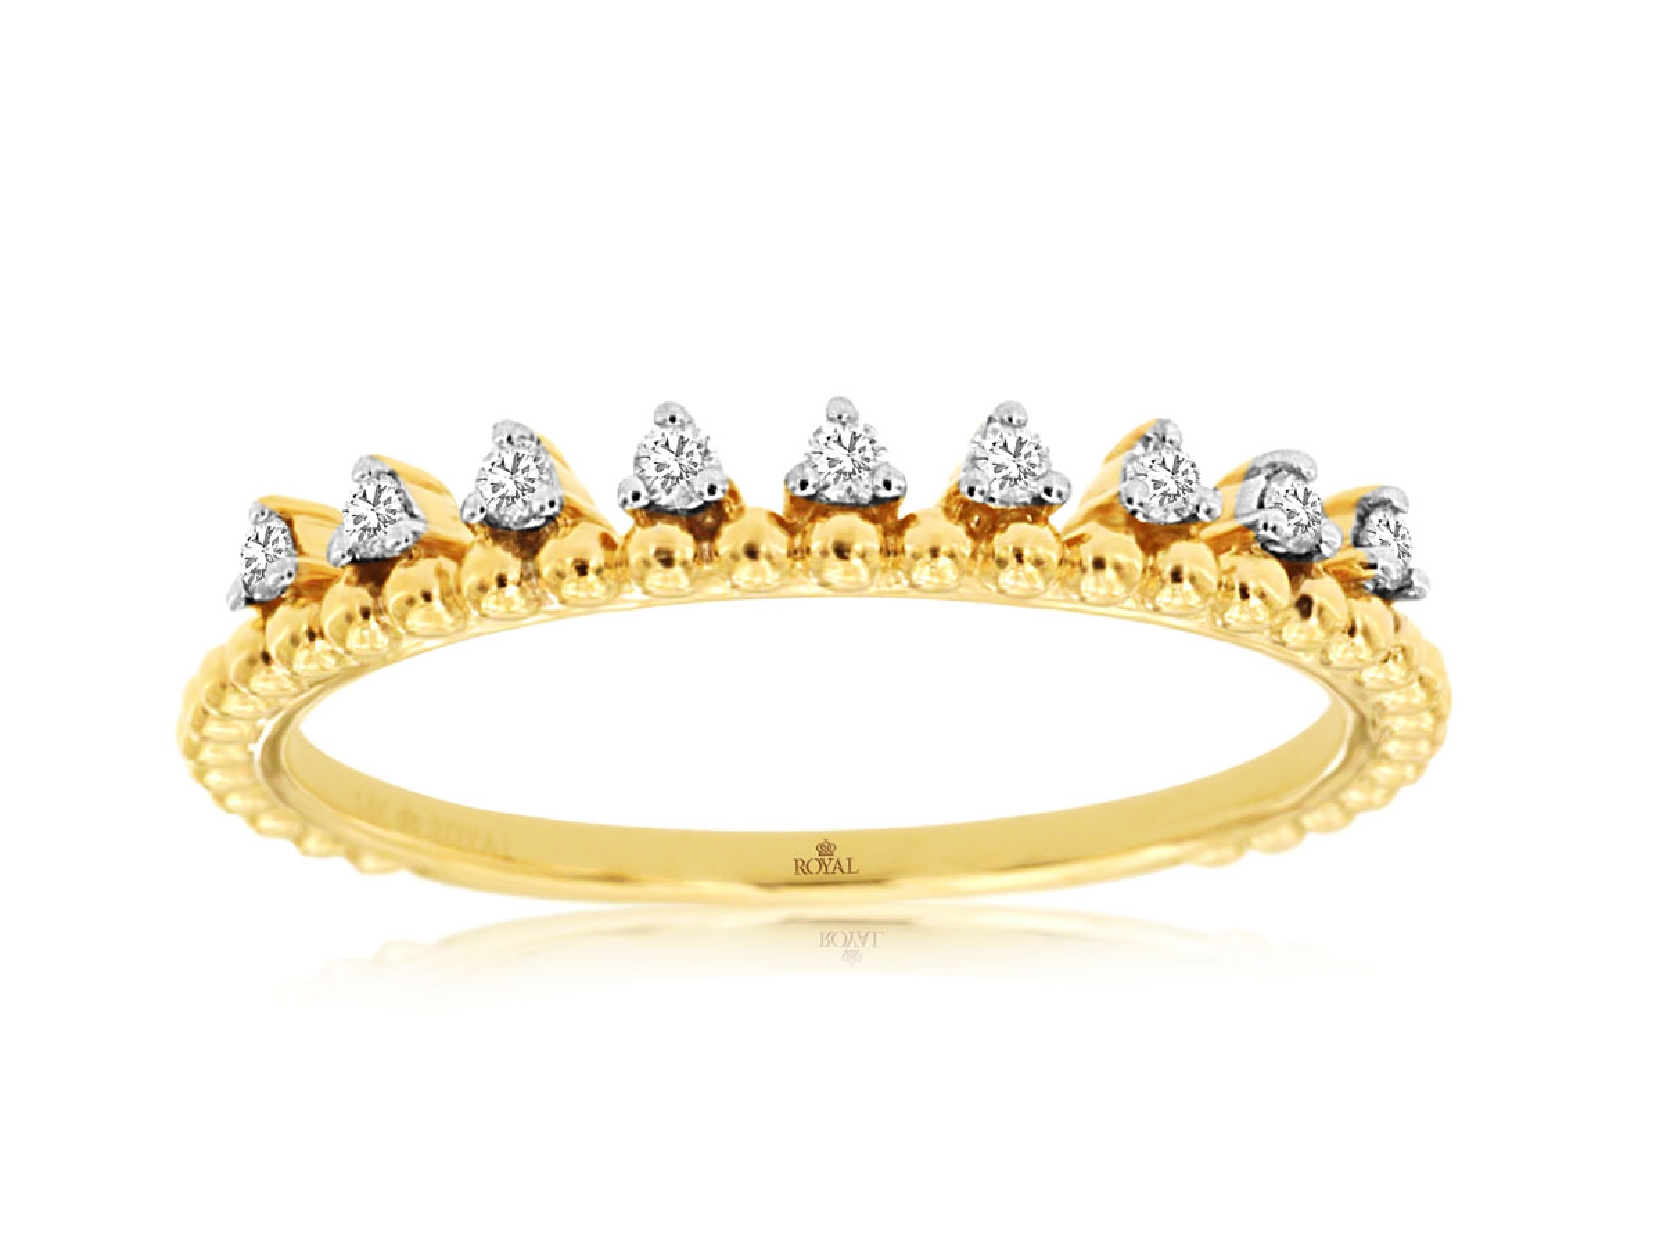 14K Yellow Gold Diamond Wedding Band with Milgrain and Triangular Details

.1 Ct Diamonds

Size 7.25